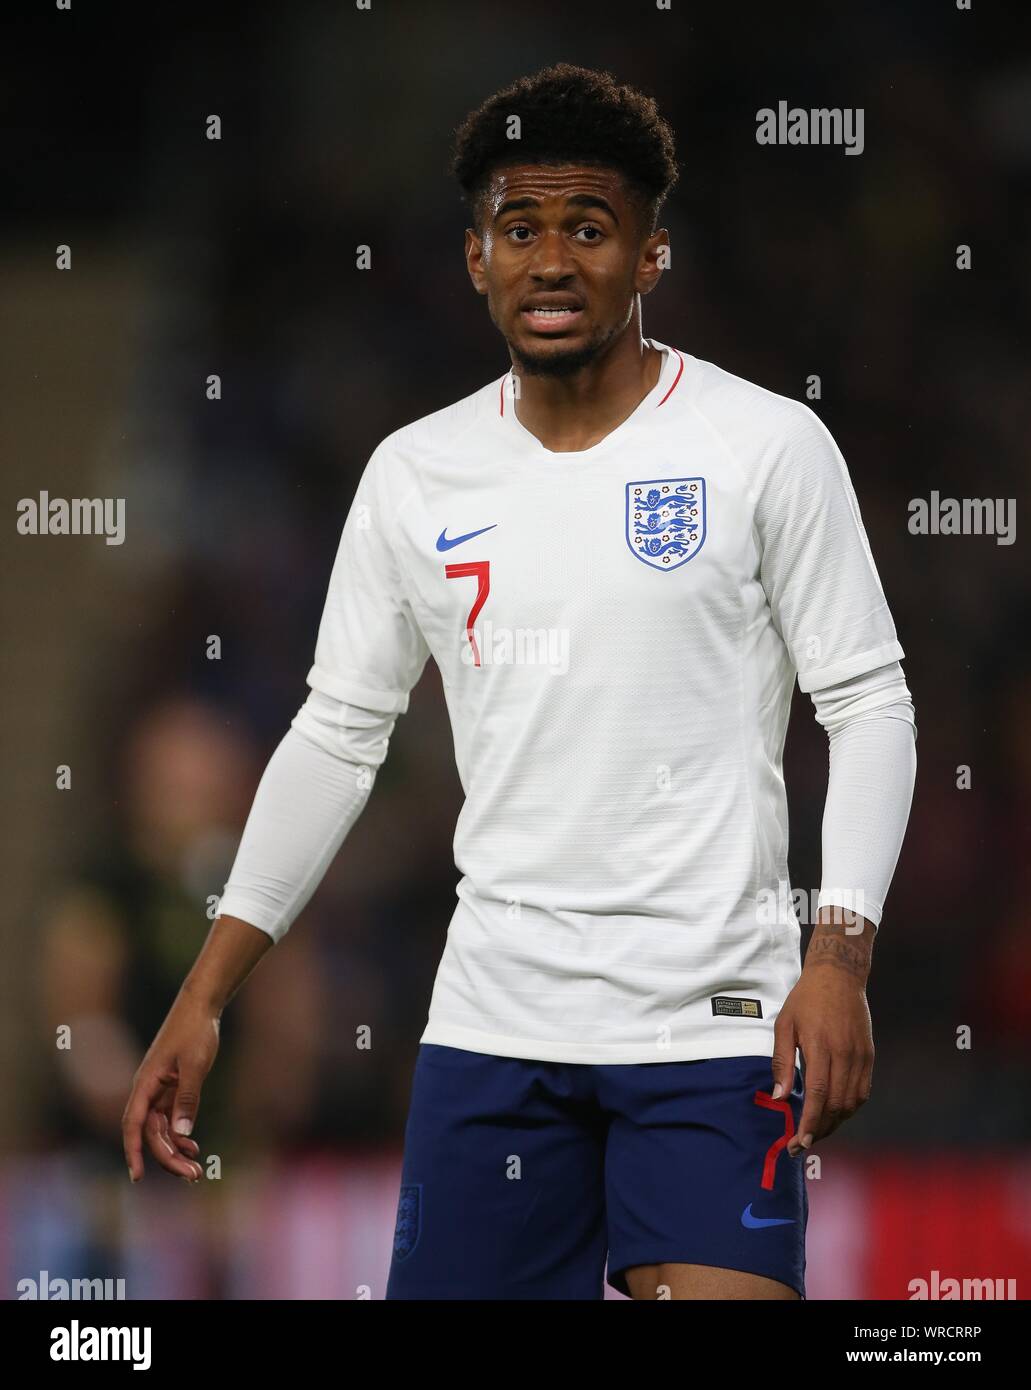 REISS NELSON, ENGLAND U21, 2019 Stock Photo